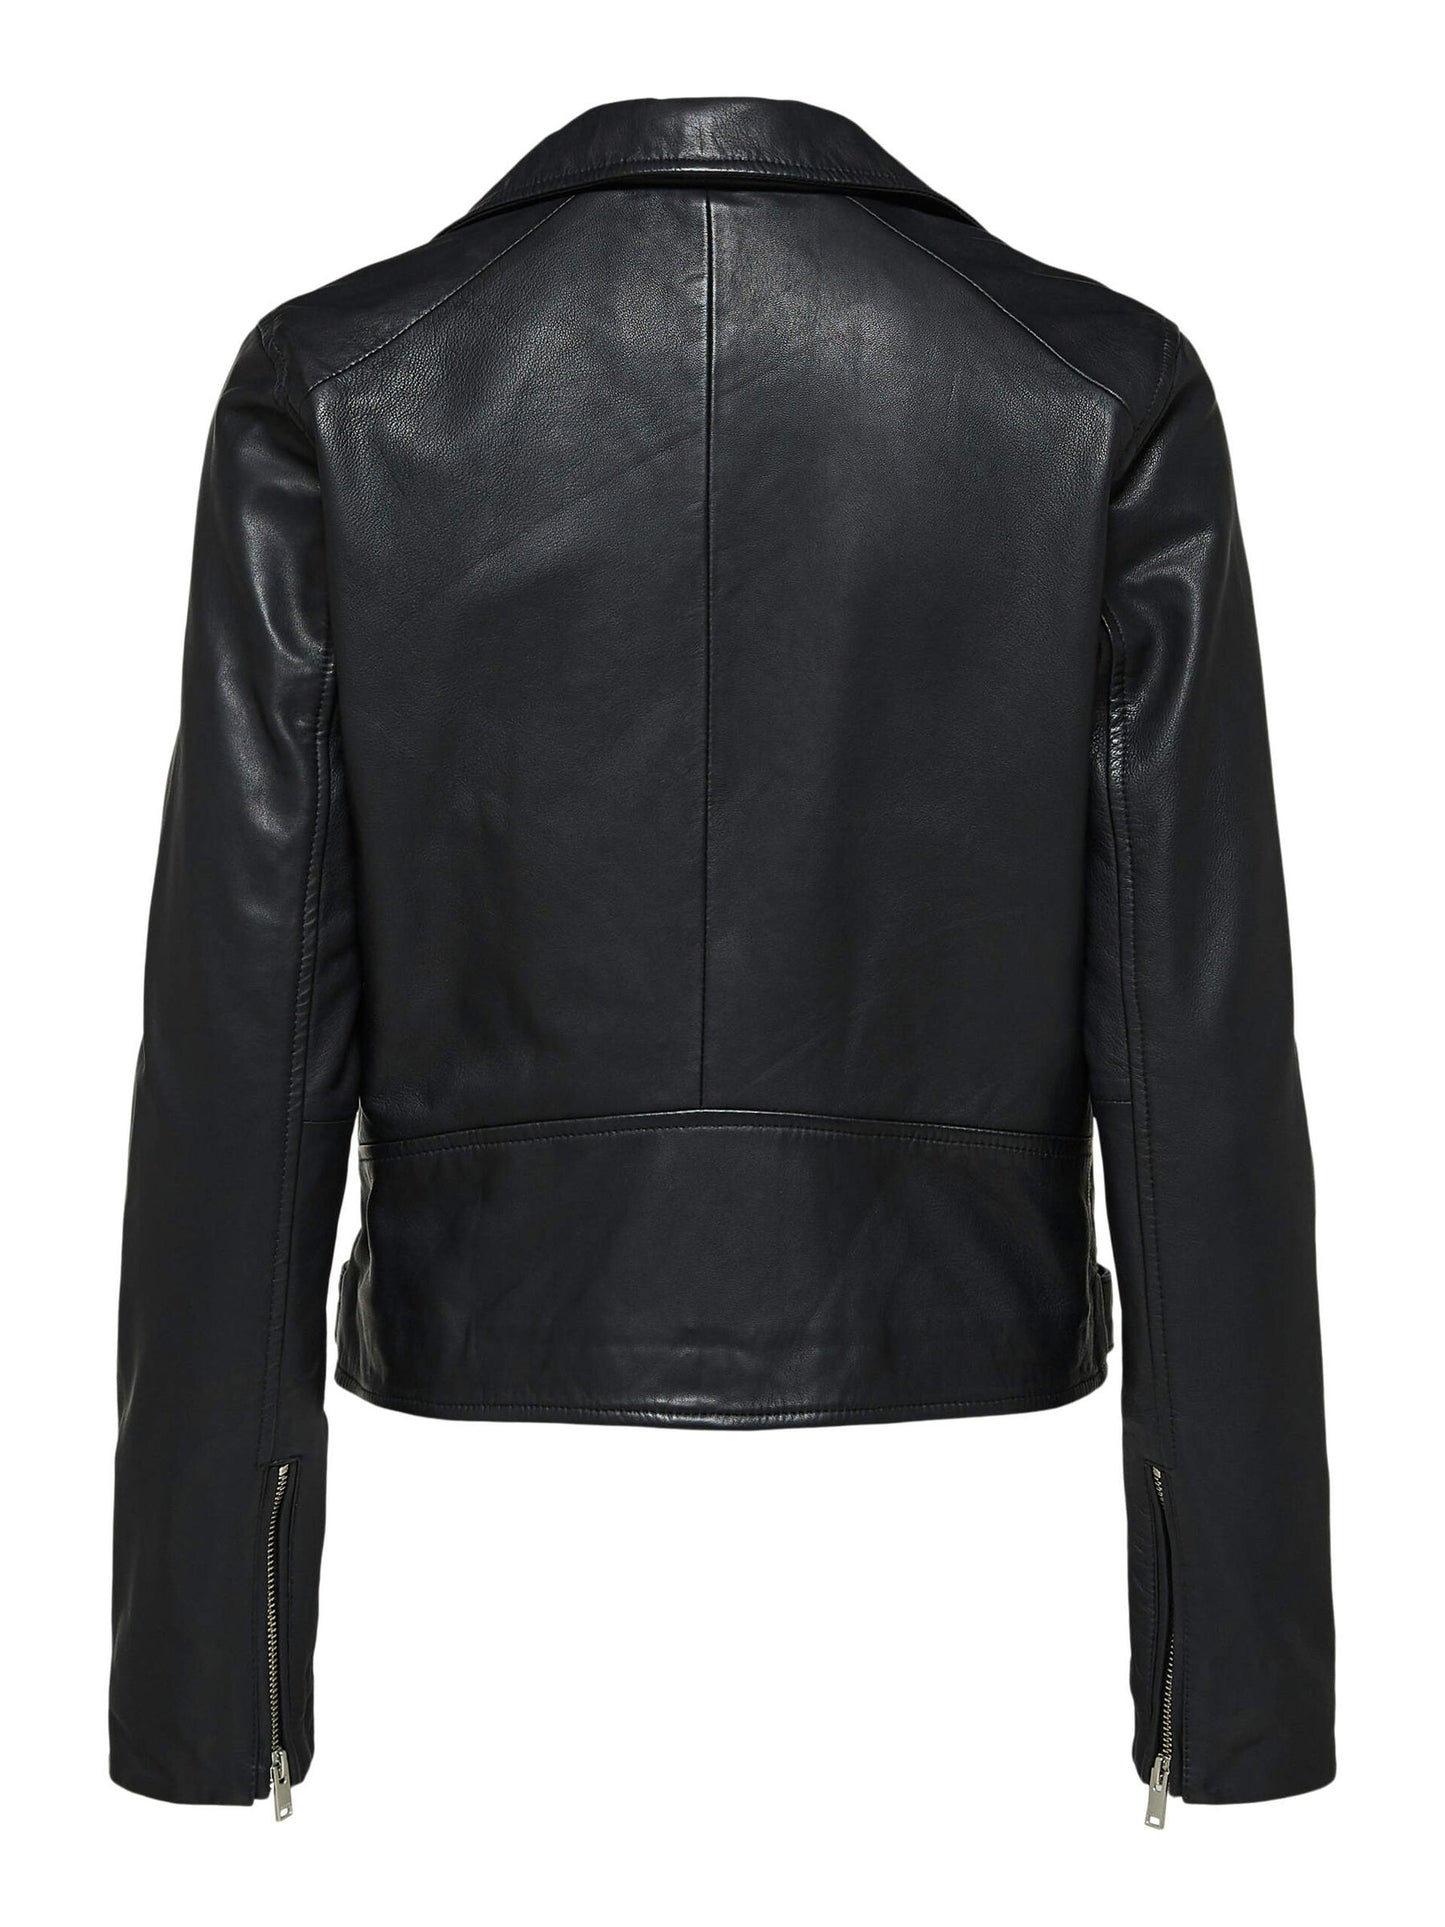 Kate Leather Jacket - Selected Femme